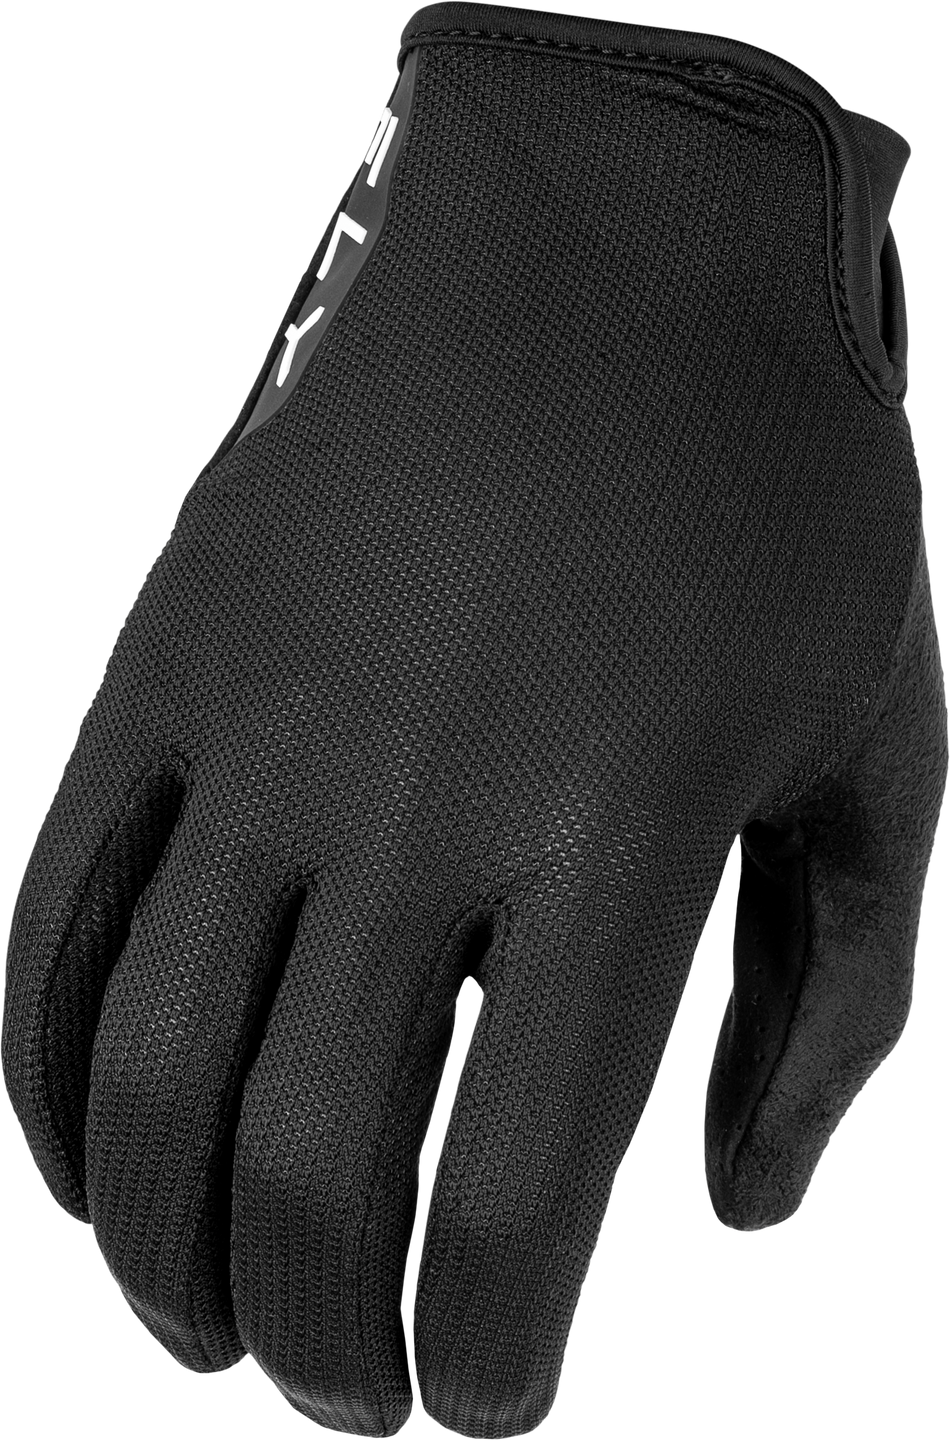 FLY RACING Mesh Gloves Black Lg 375-330L